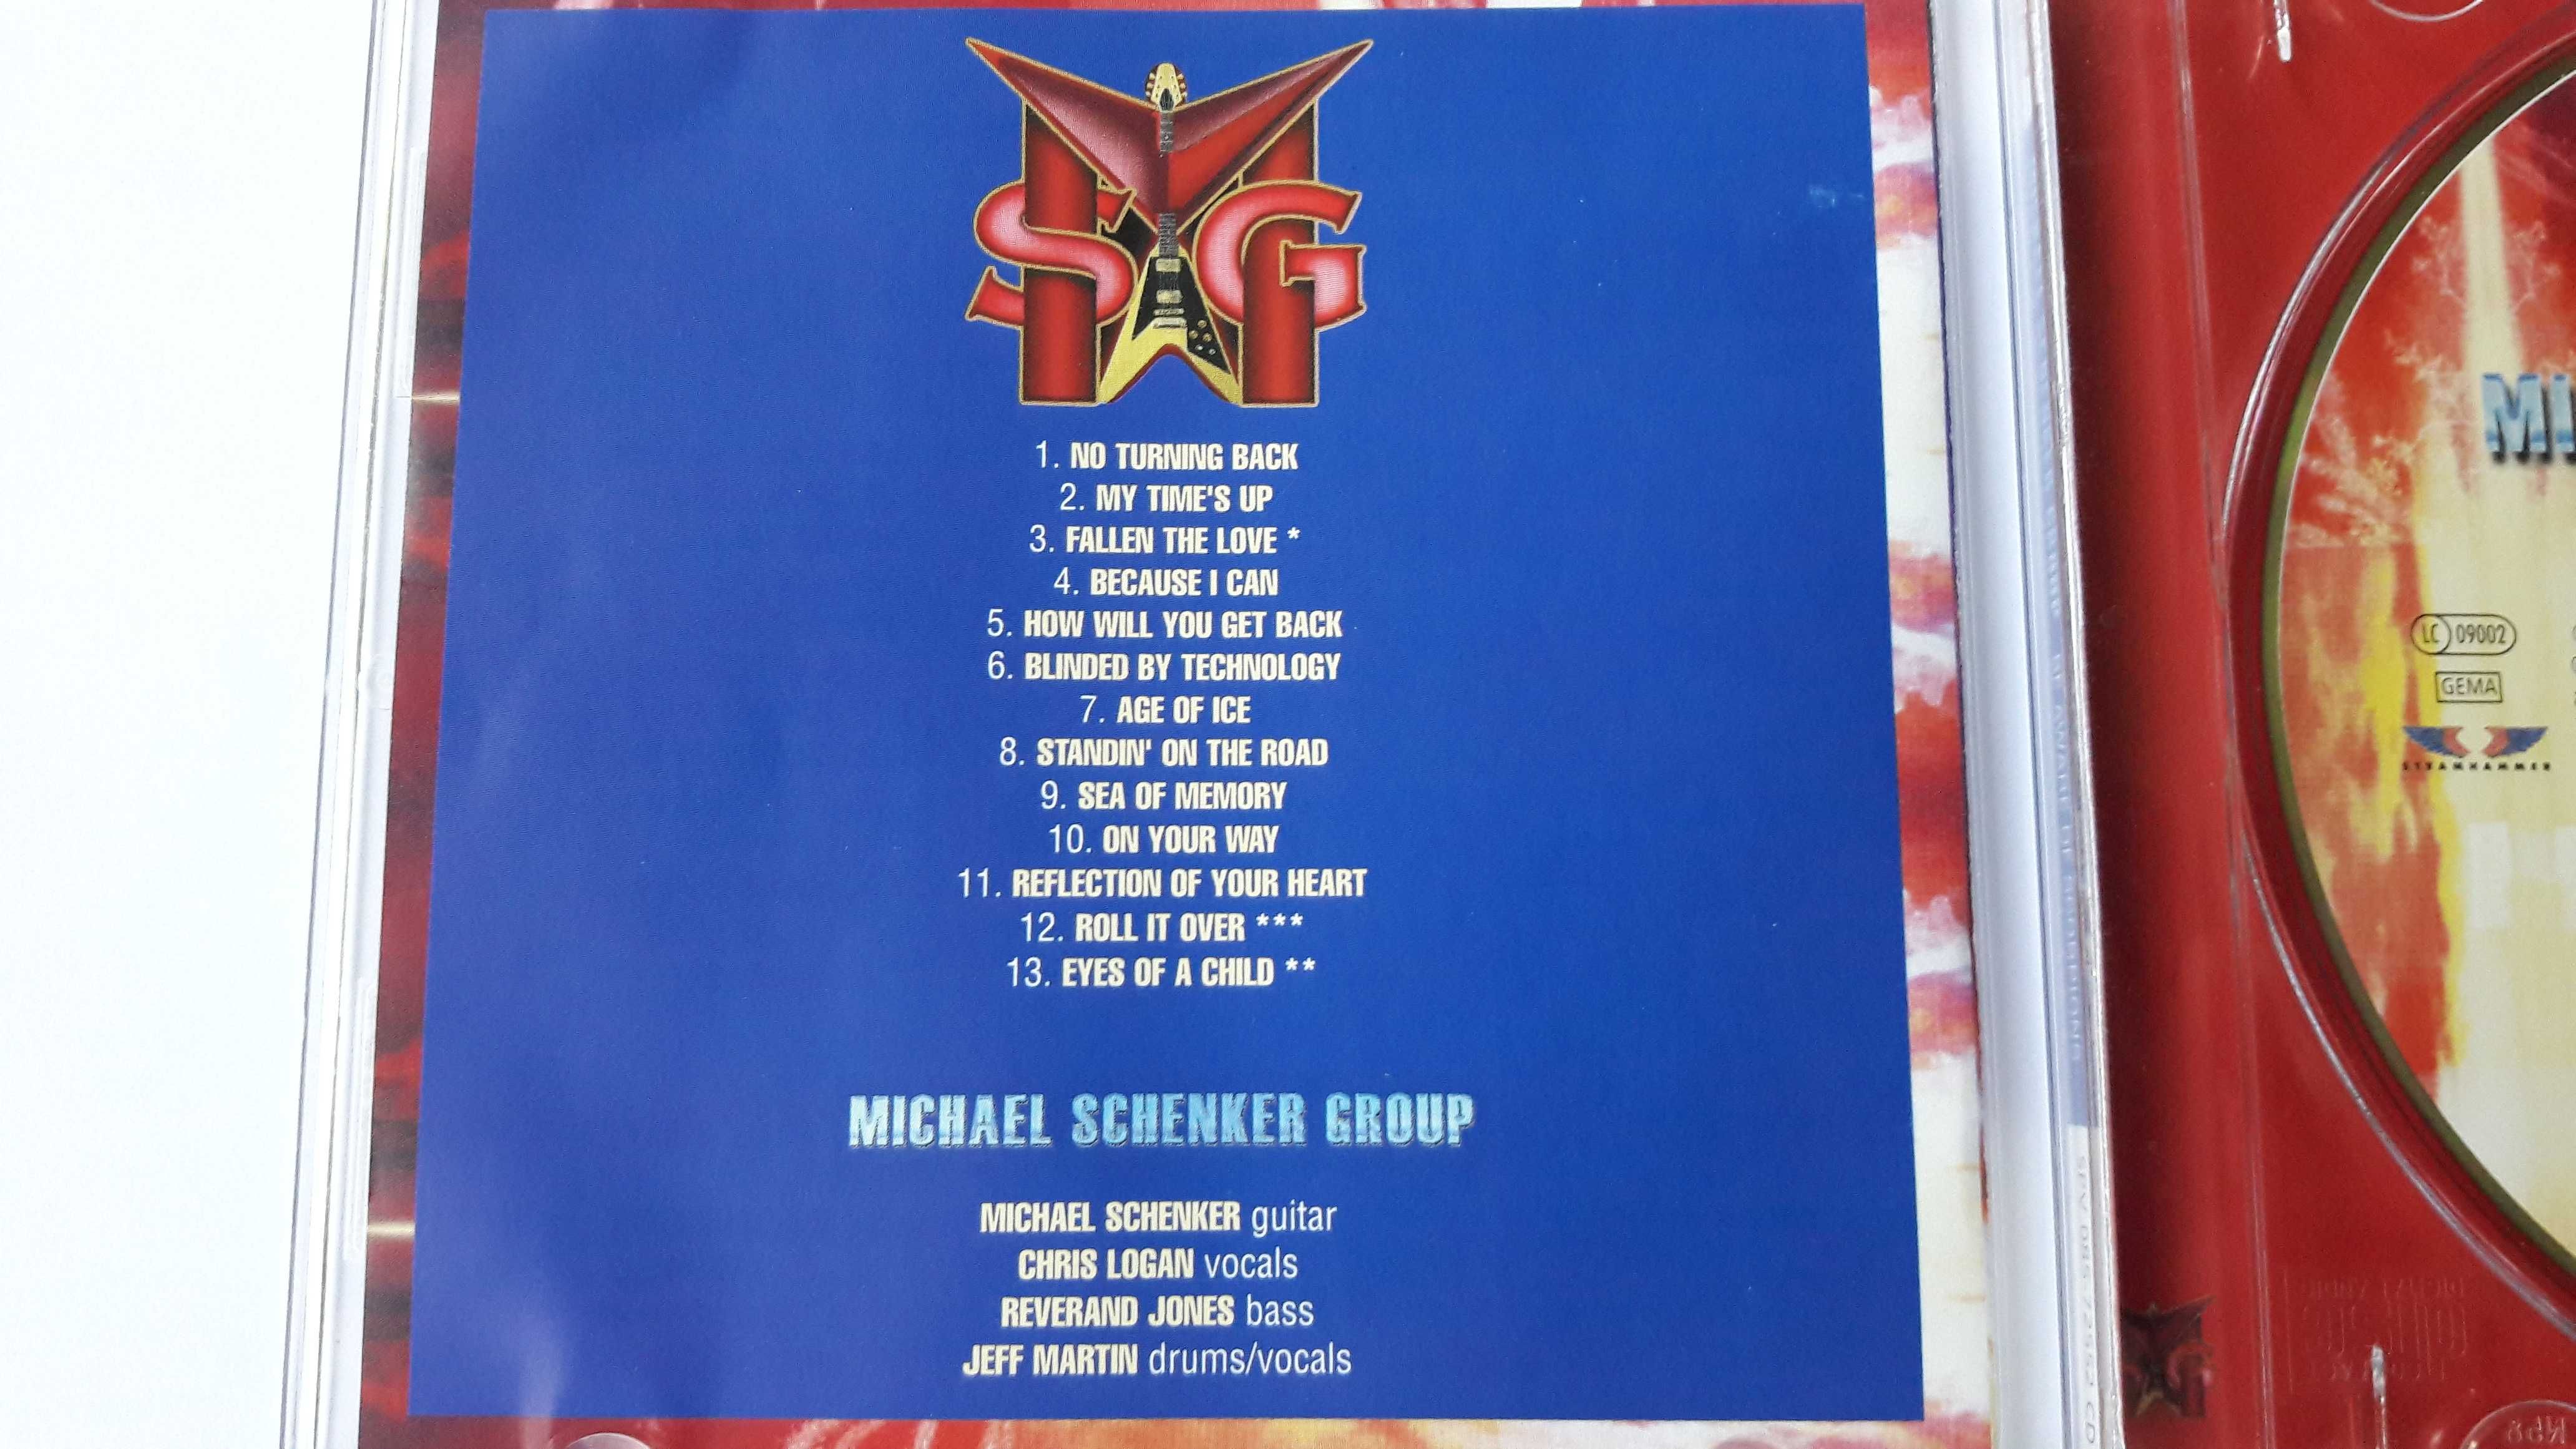 Фирменный диск Michael Schenker Group "Be Aware Of Scorpions" 2001